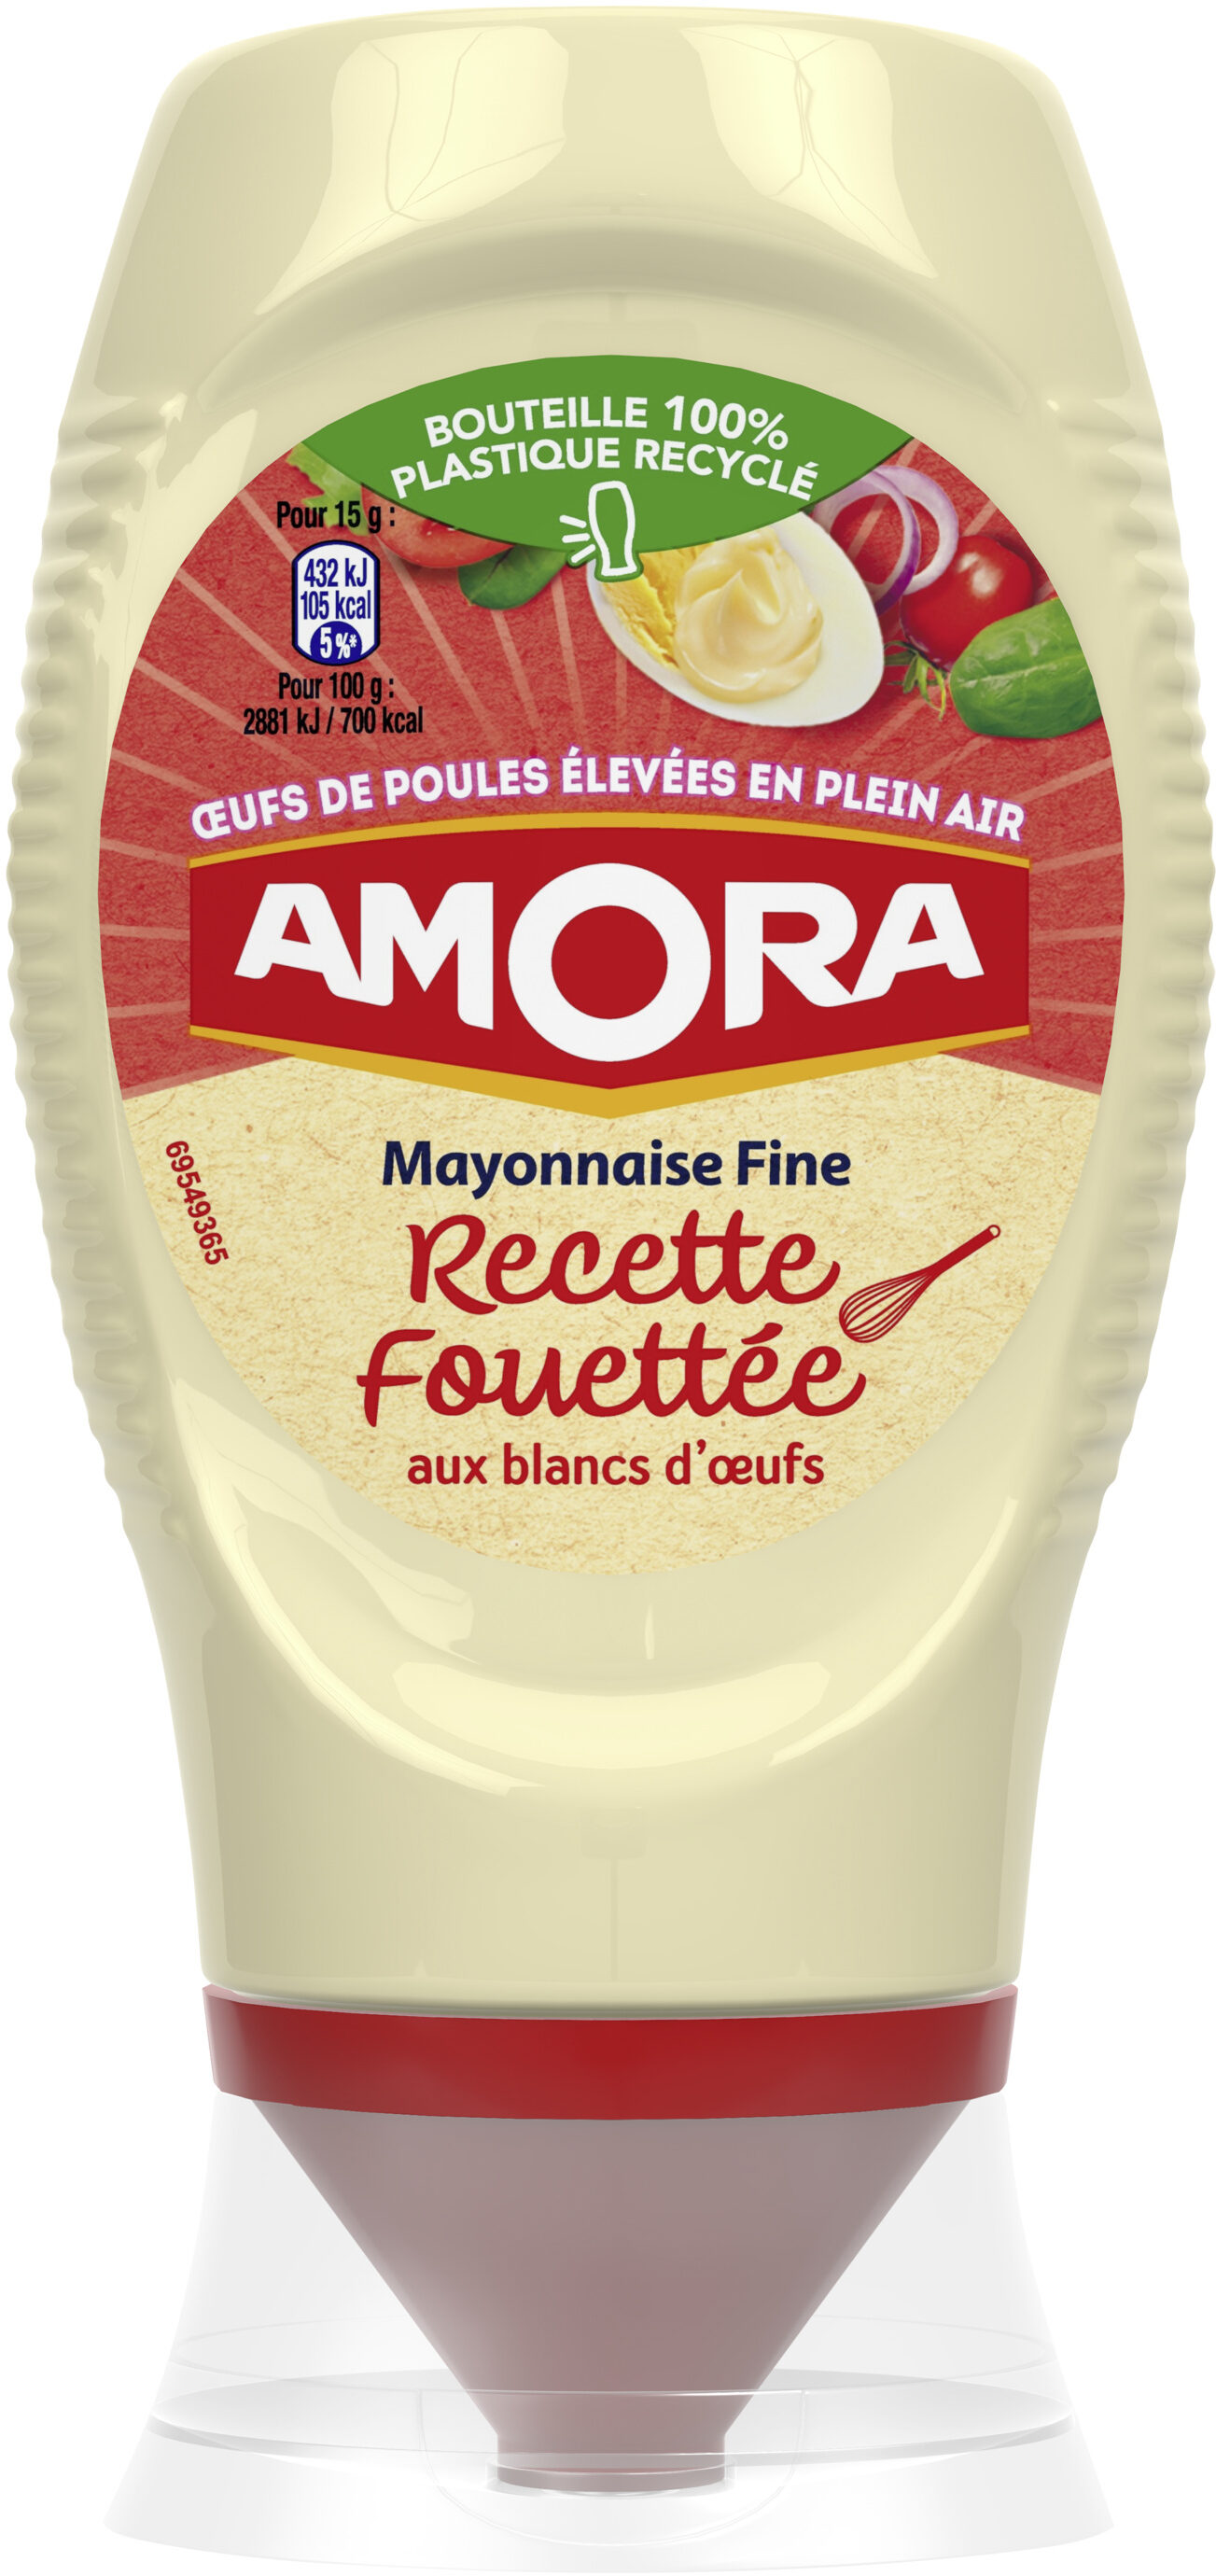 AMORA Mayonnaise Recette Fouettée 230g - Producto - fr